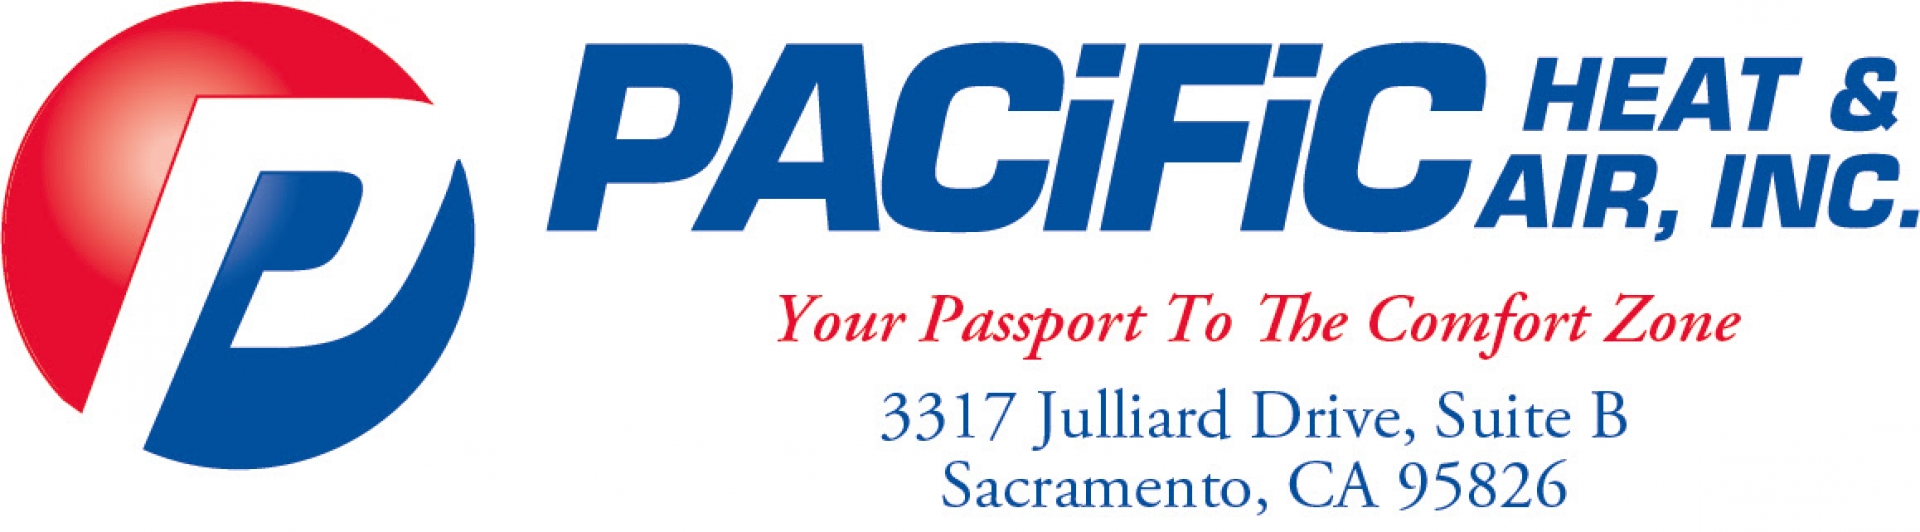 Pacific Heat & Air, Inc company logo